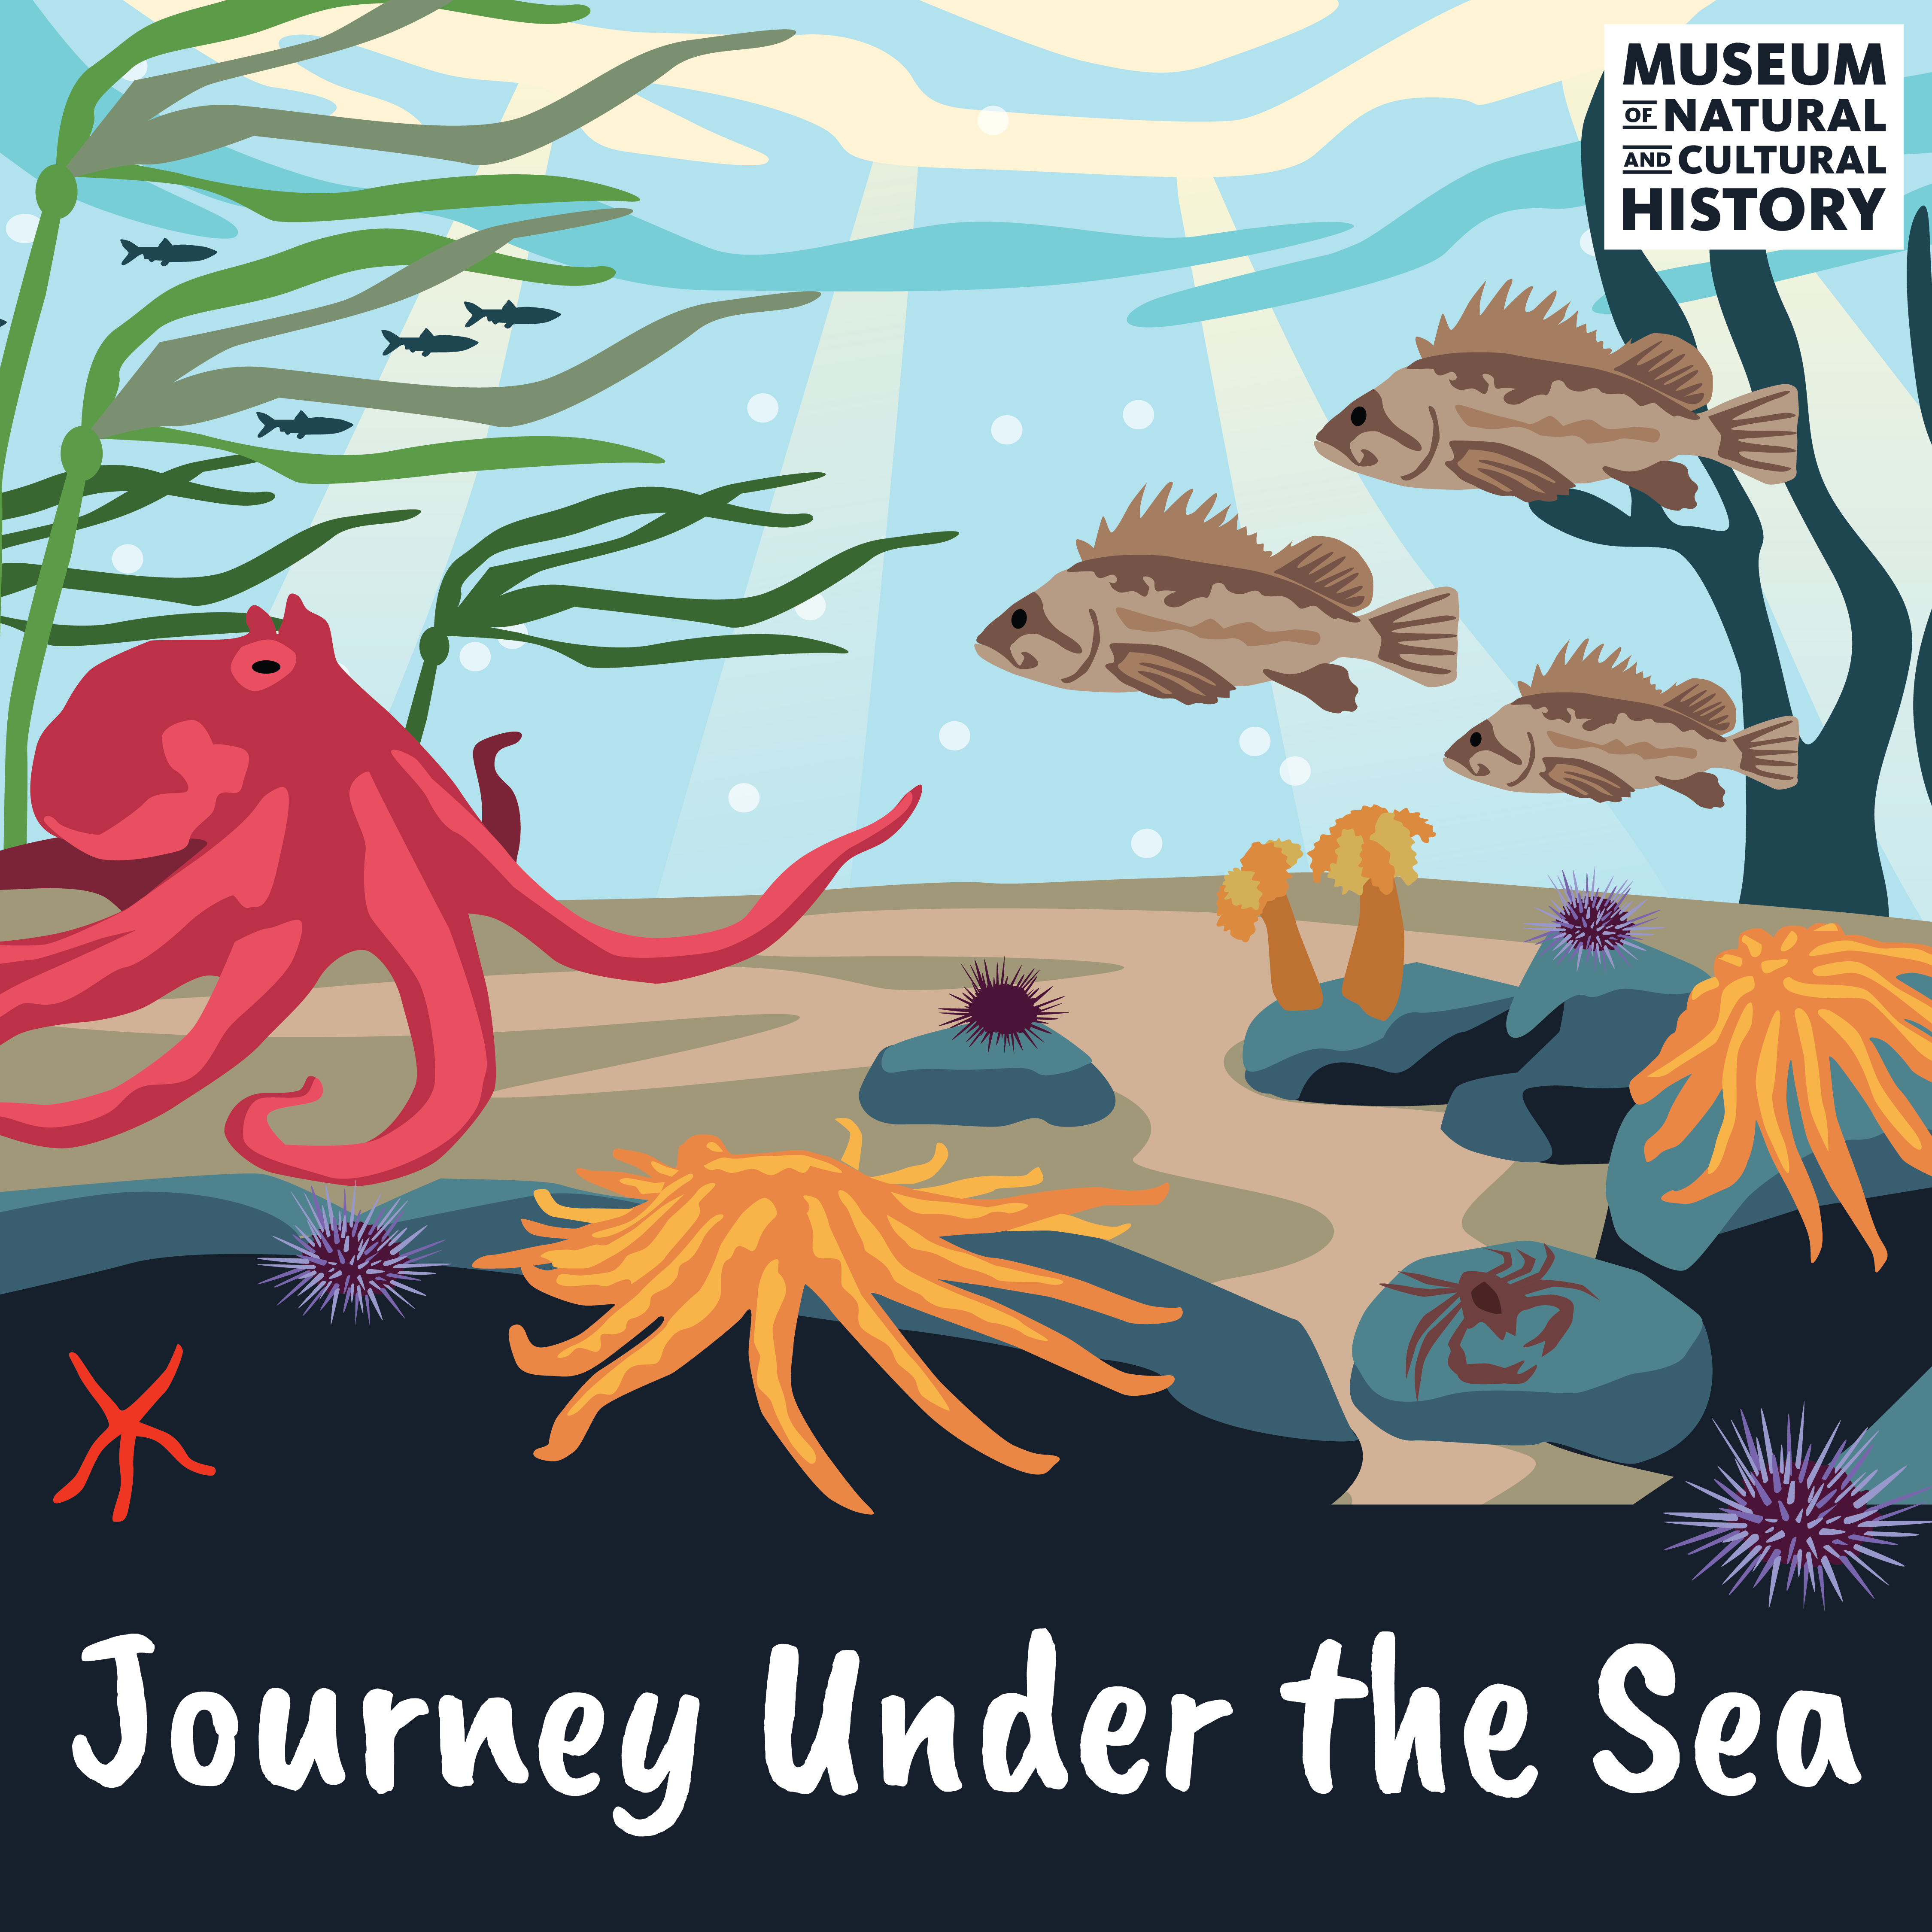 Journey Under the Sea art with sea stars, octopus, kelp, sea urchin, crab, and sea anemones